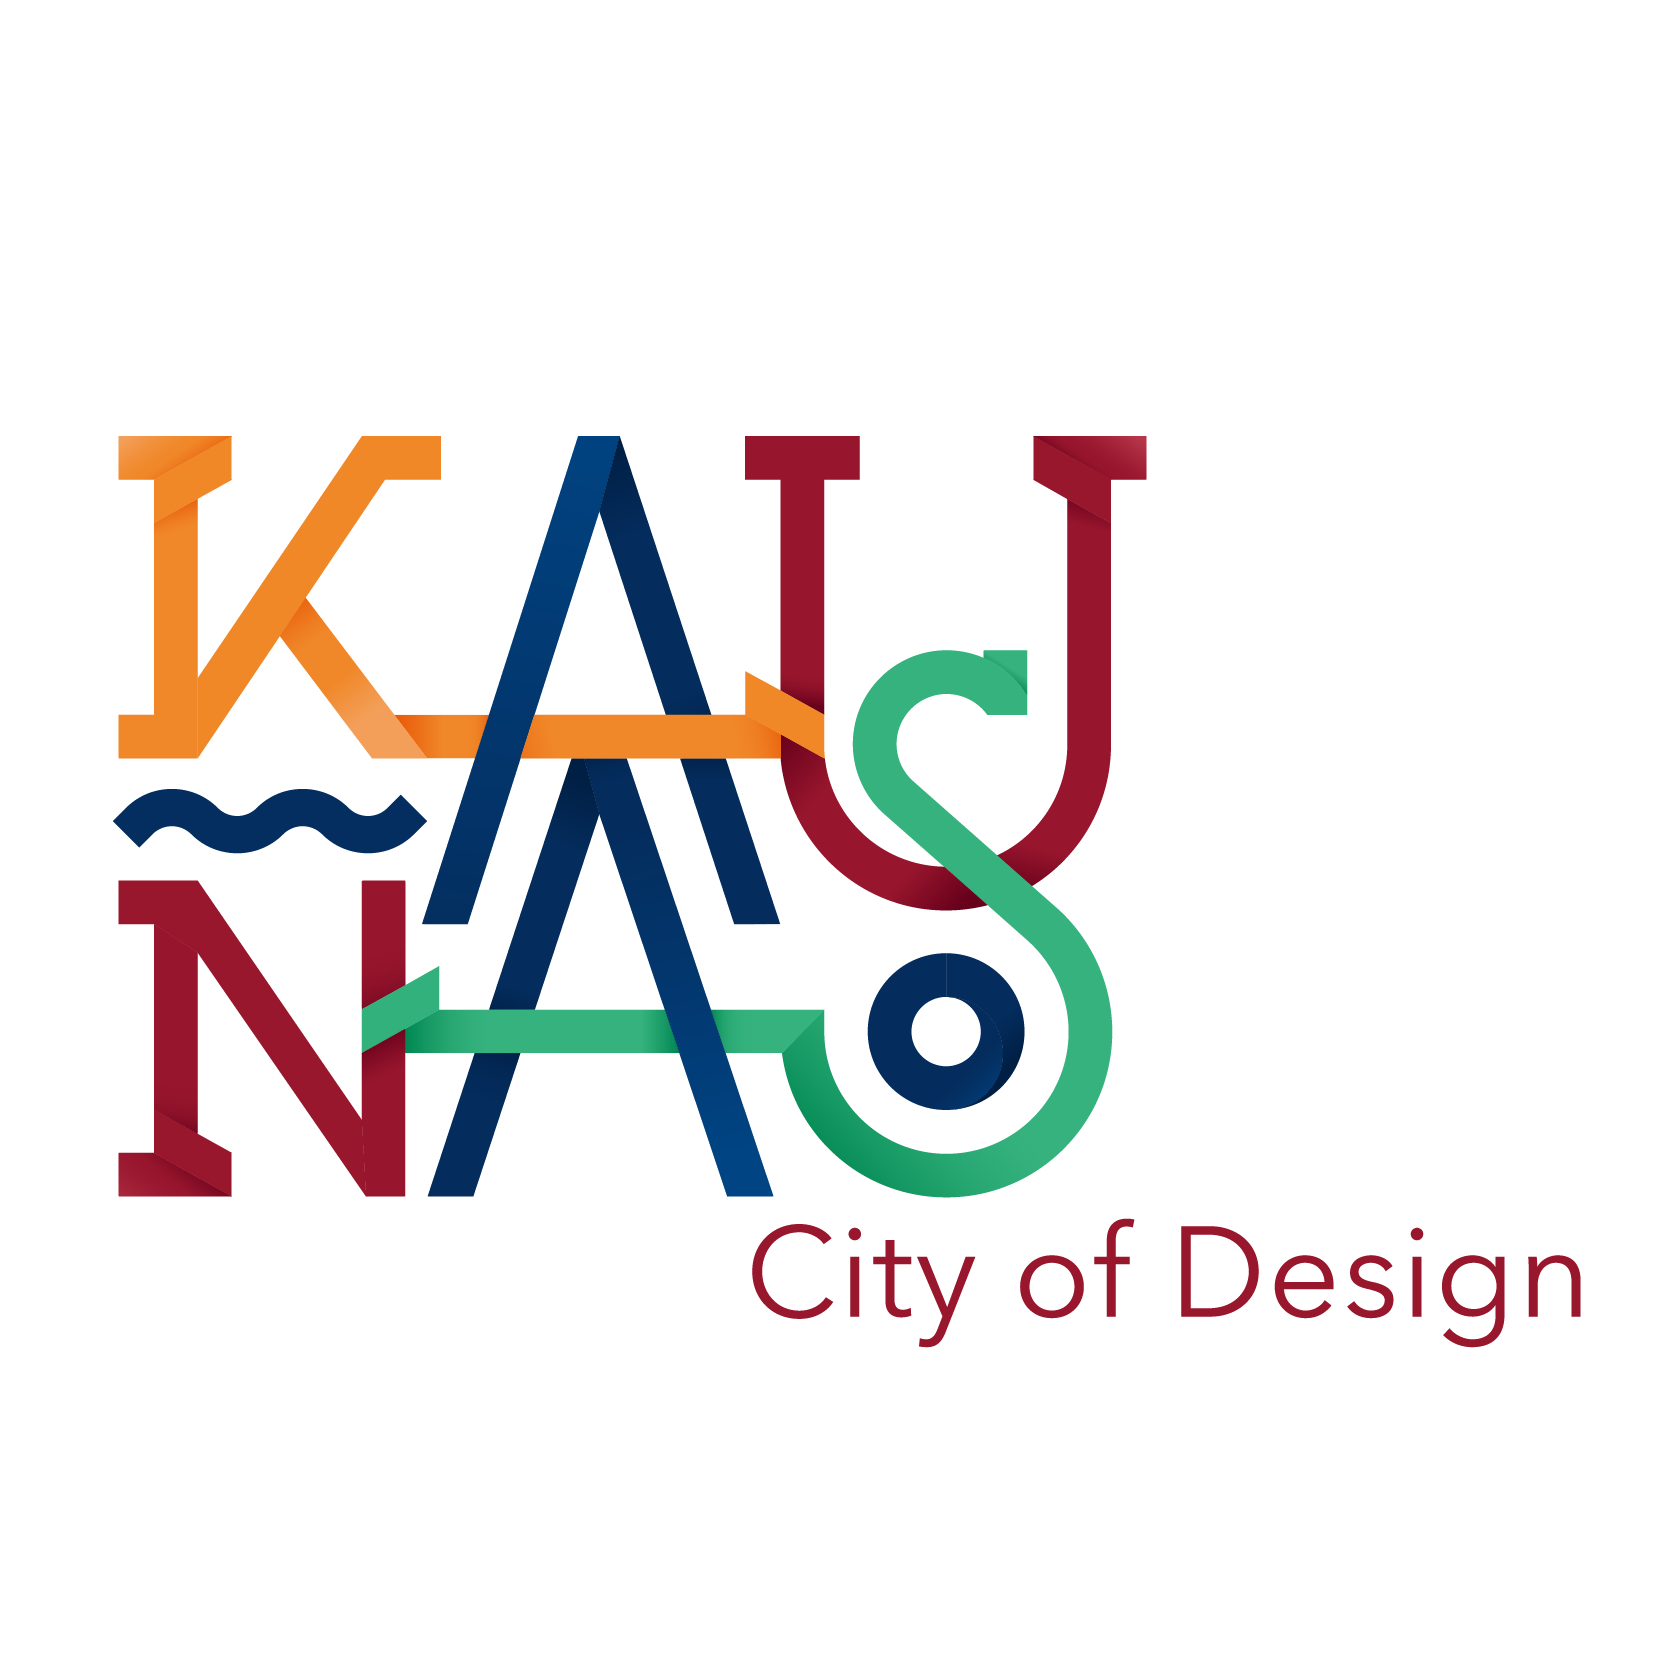 Kaunas, City of Design